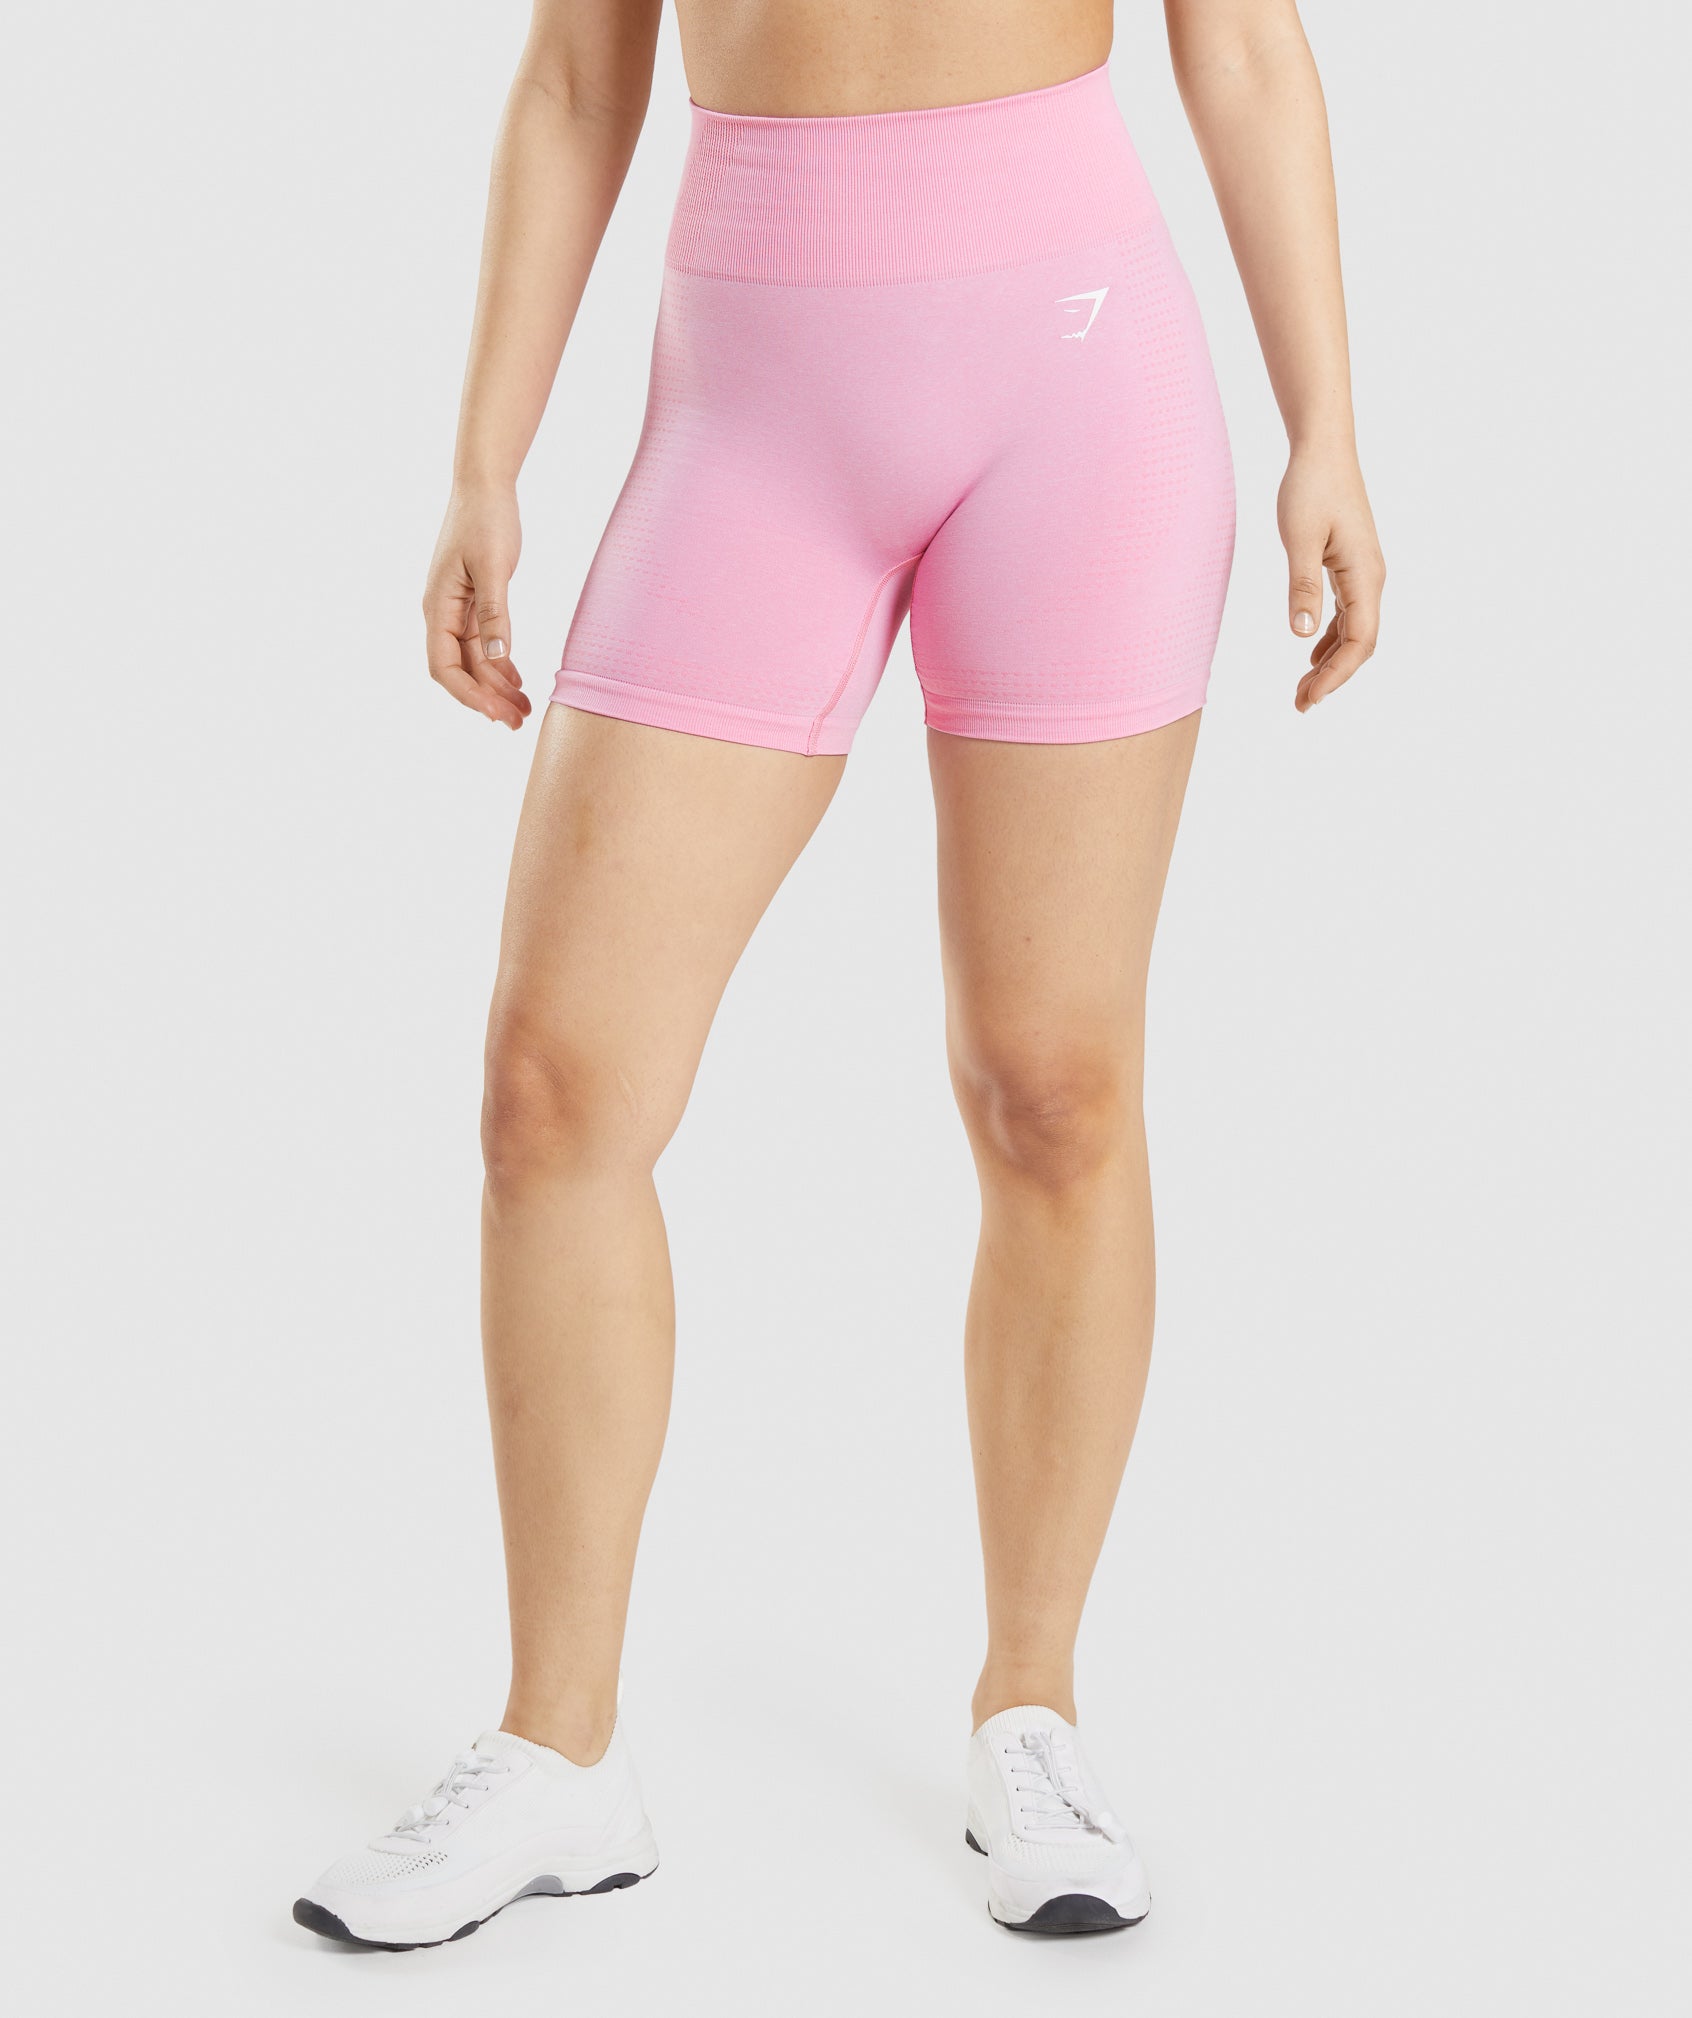 Gymshark, Shorts, Gymshark Hot Pink Running Shorts In S